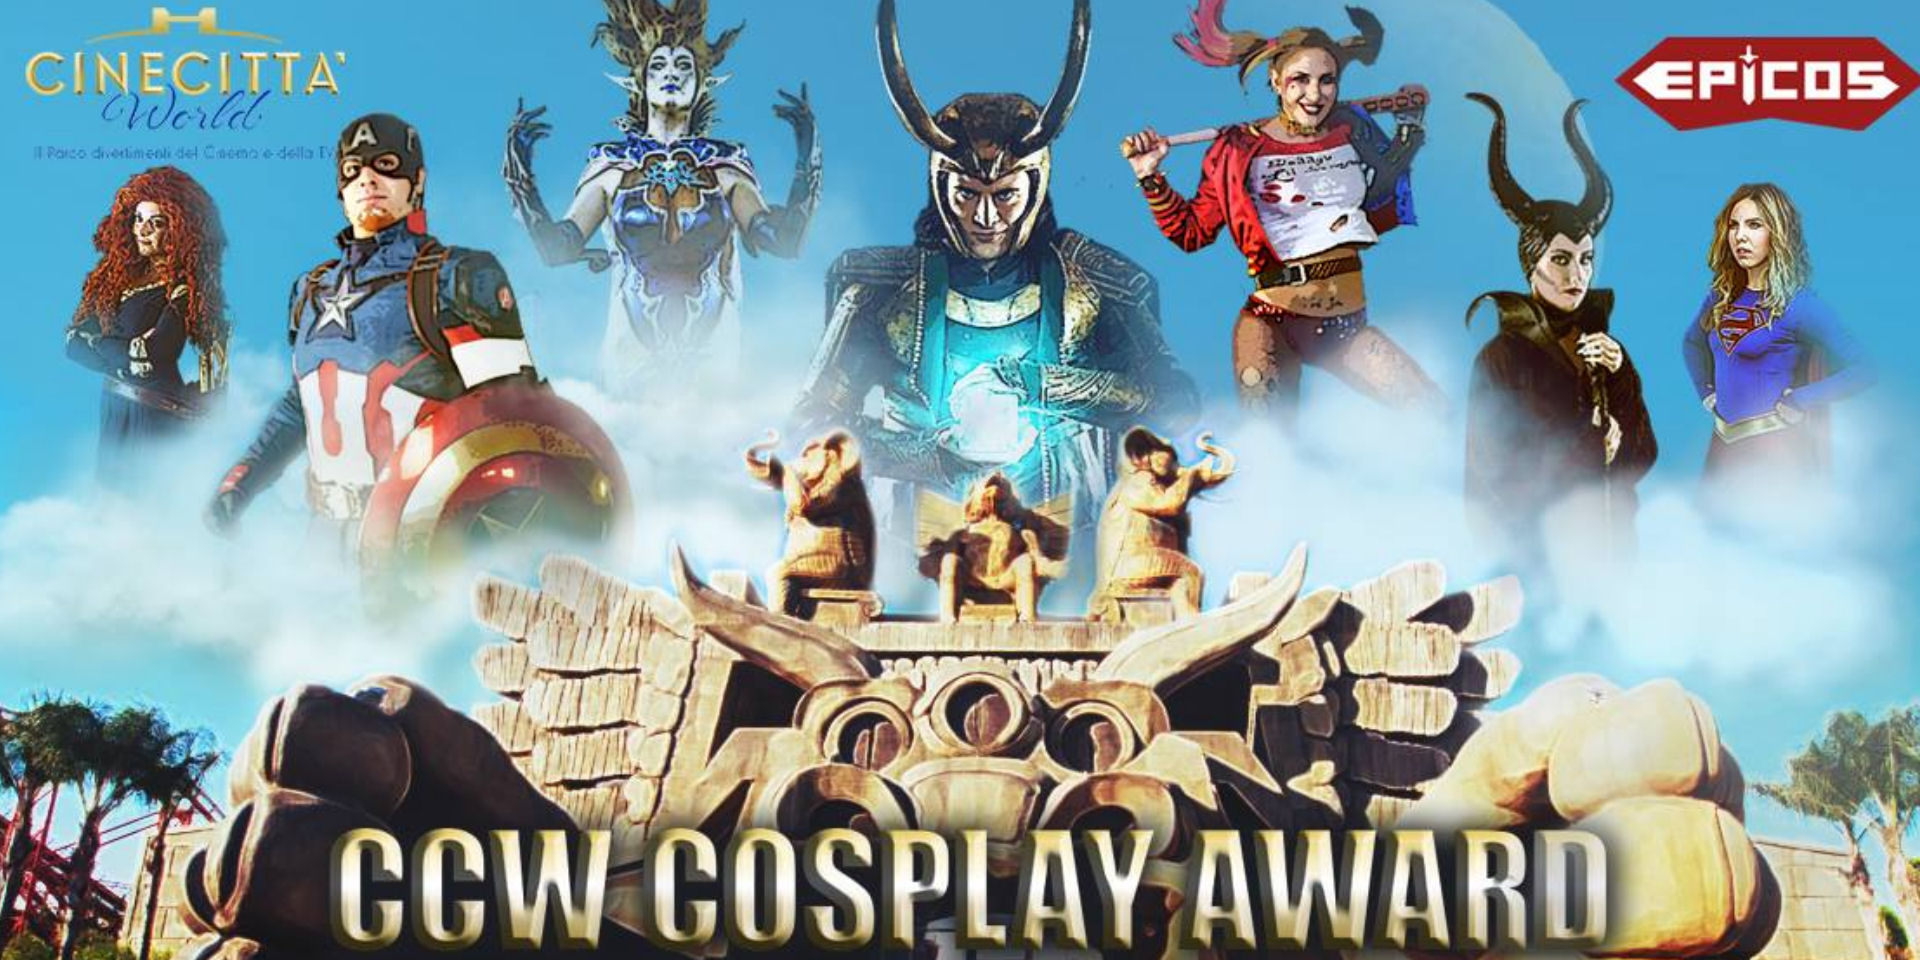 Cinecittà World Cosplay Award 2017